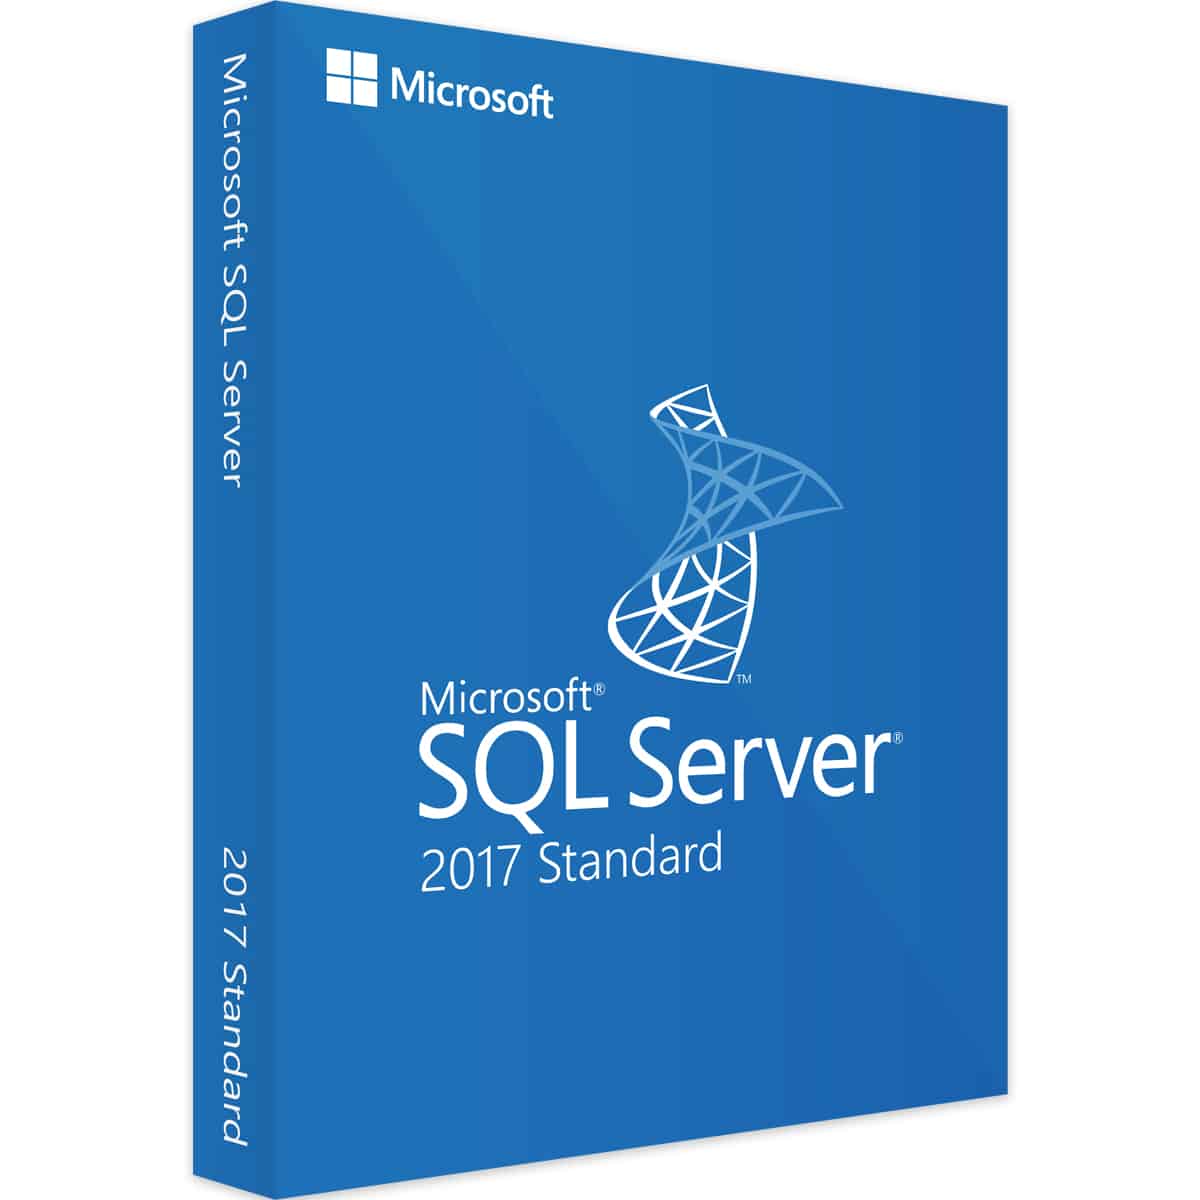 SQL Server 2017 Standard 1user CAL Key